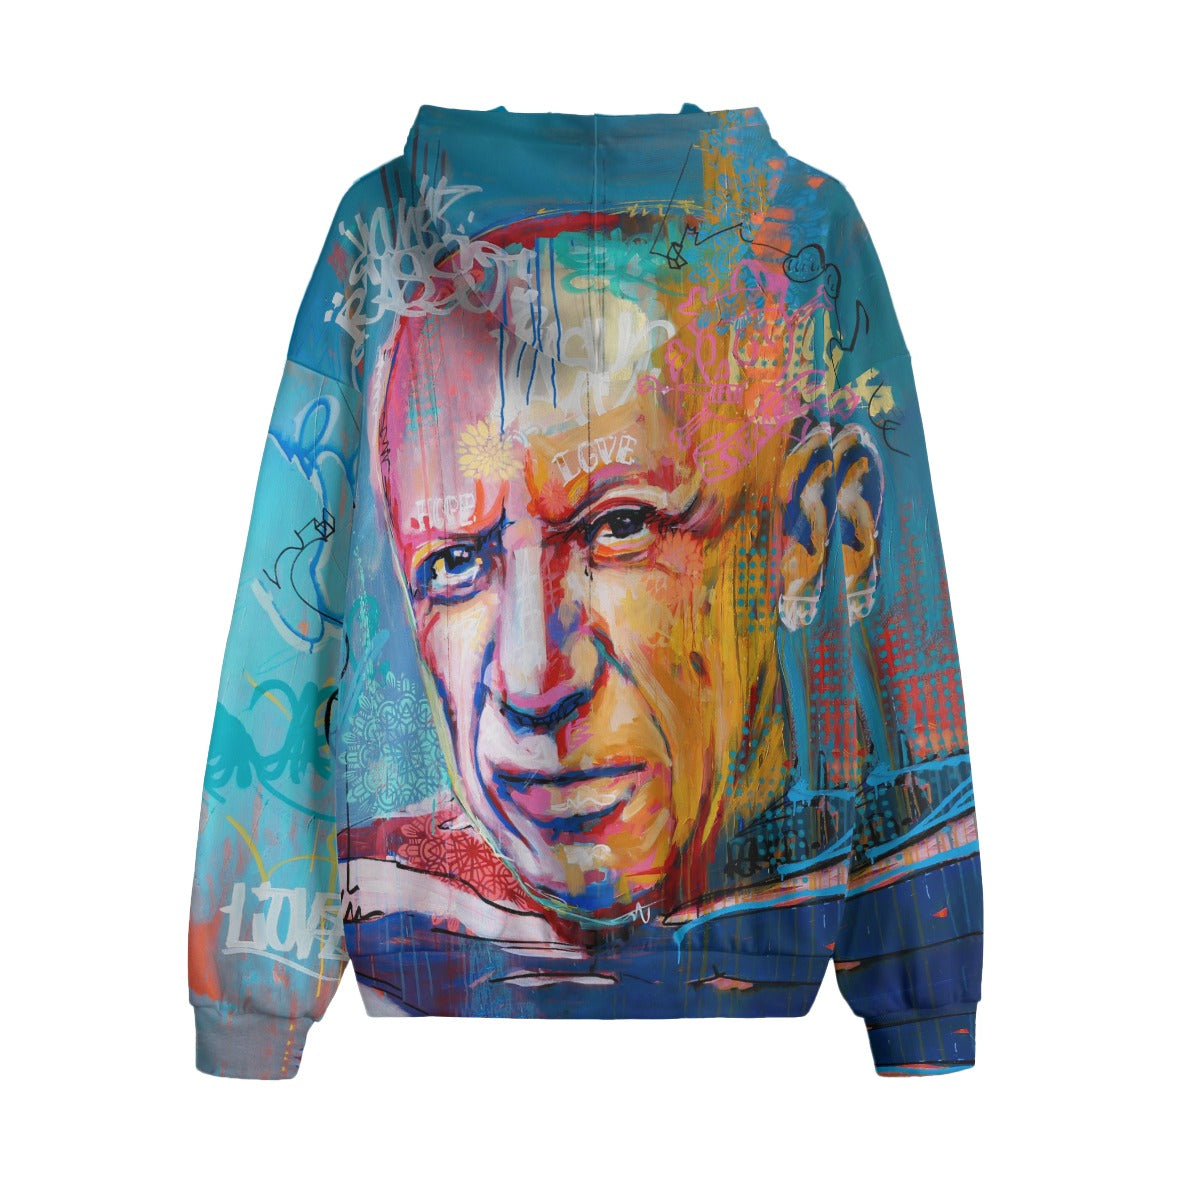 Abstract art sweatshirt with geometric design